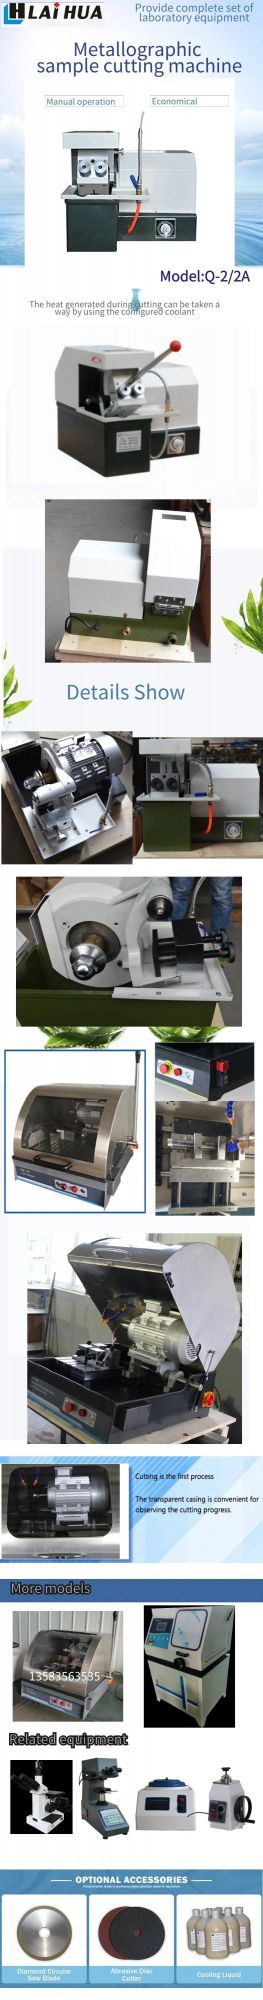 Sq-60 Metallographic Equipment -Non Metal Specimen Cutting Machine with Best Price